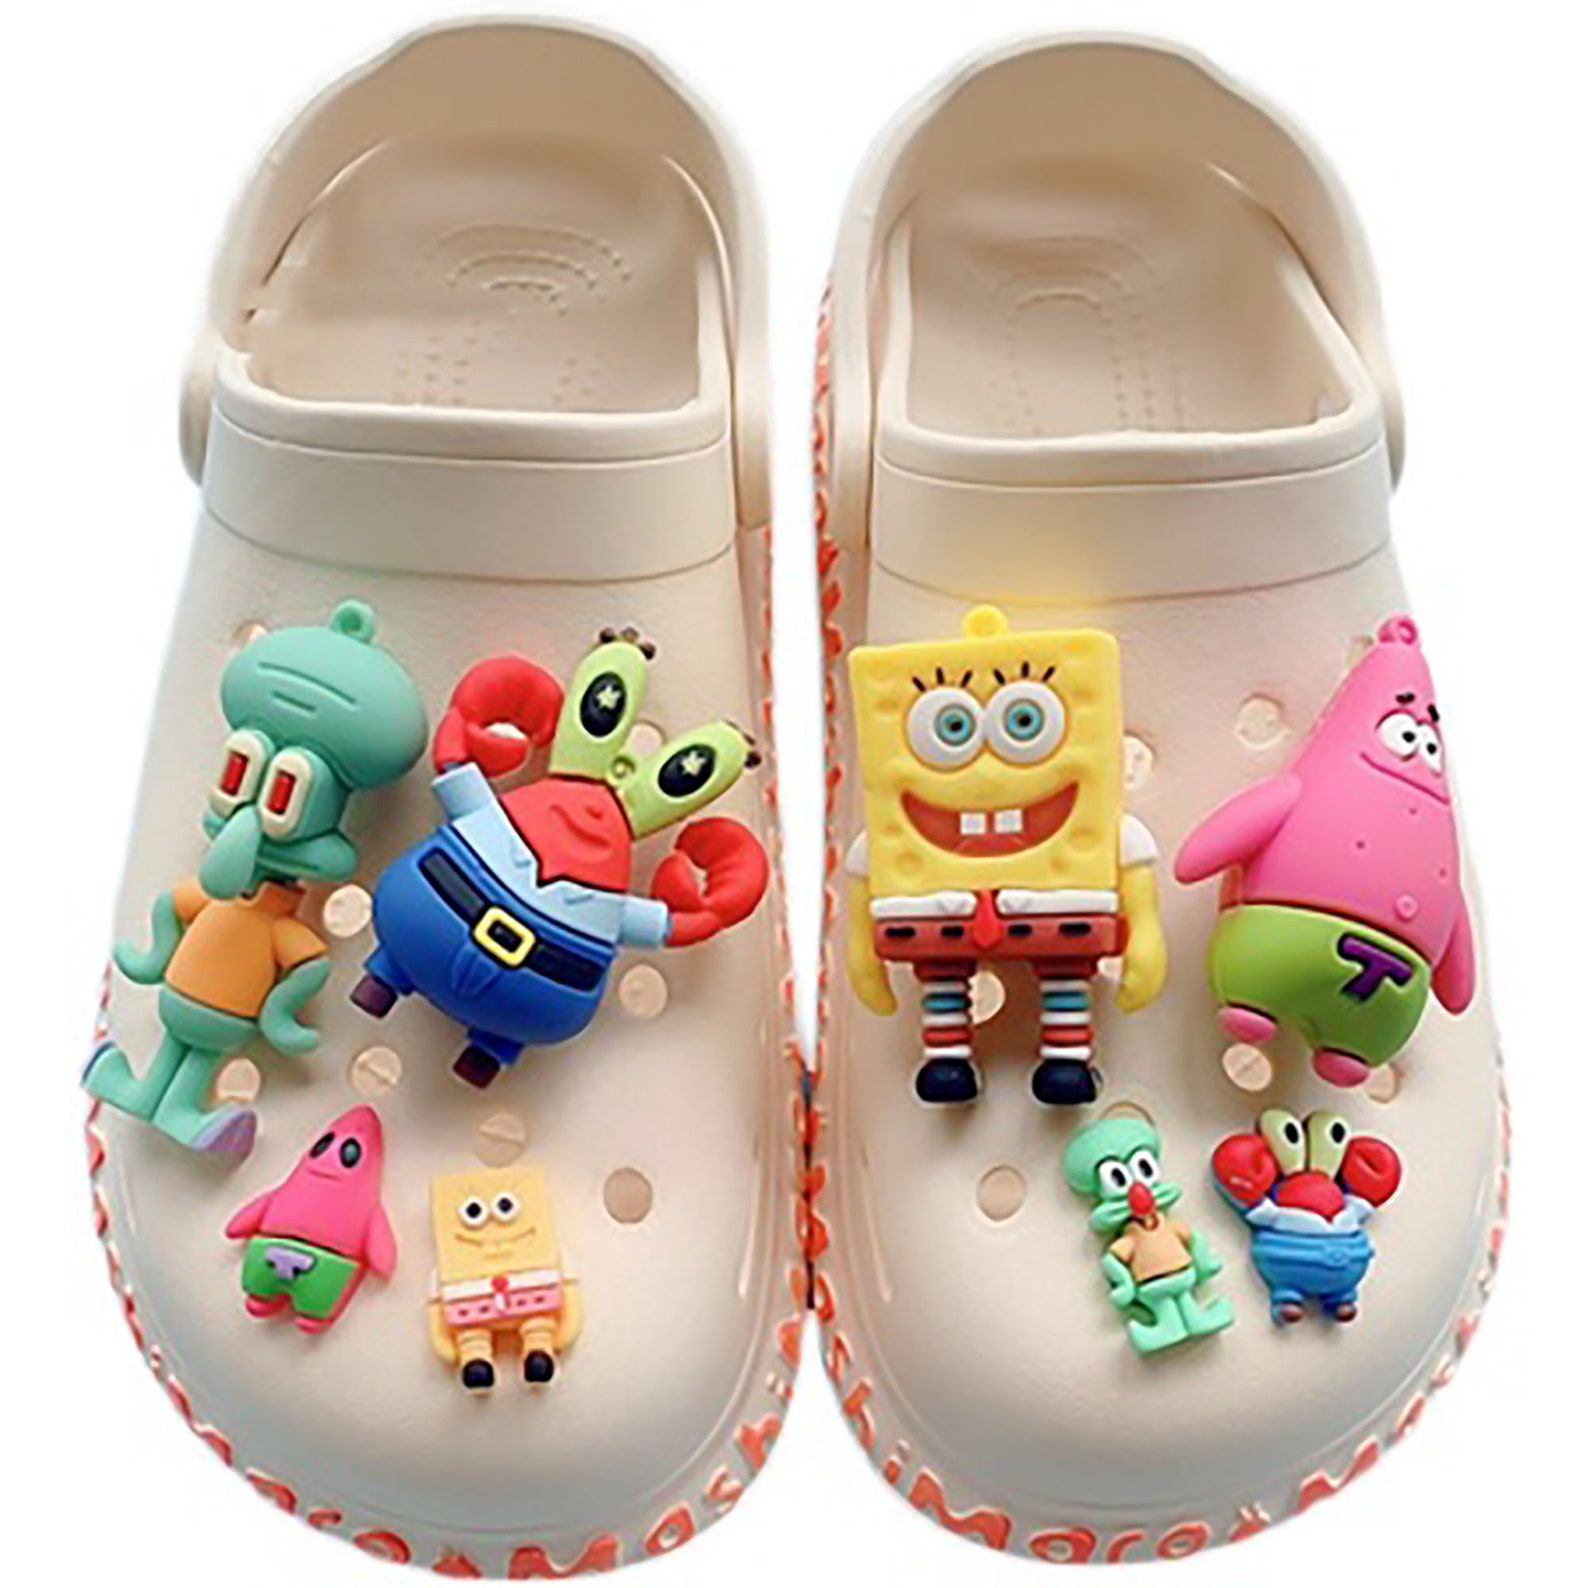 SpongeBob crocs charms shoes charm set crocs charms vendor | Etsy